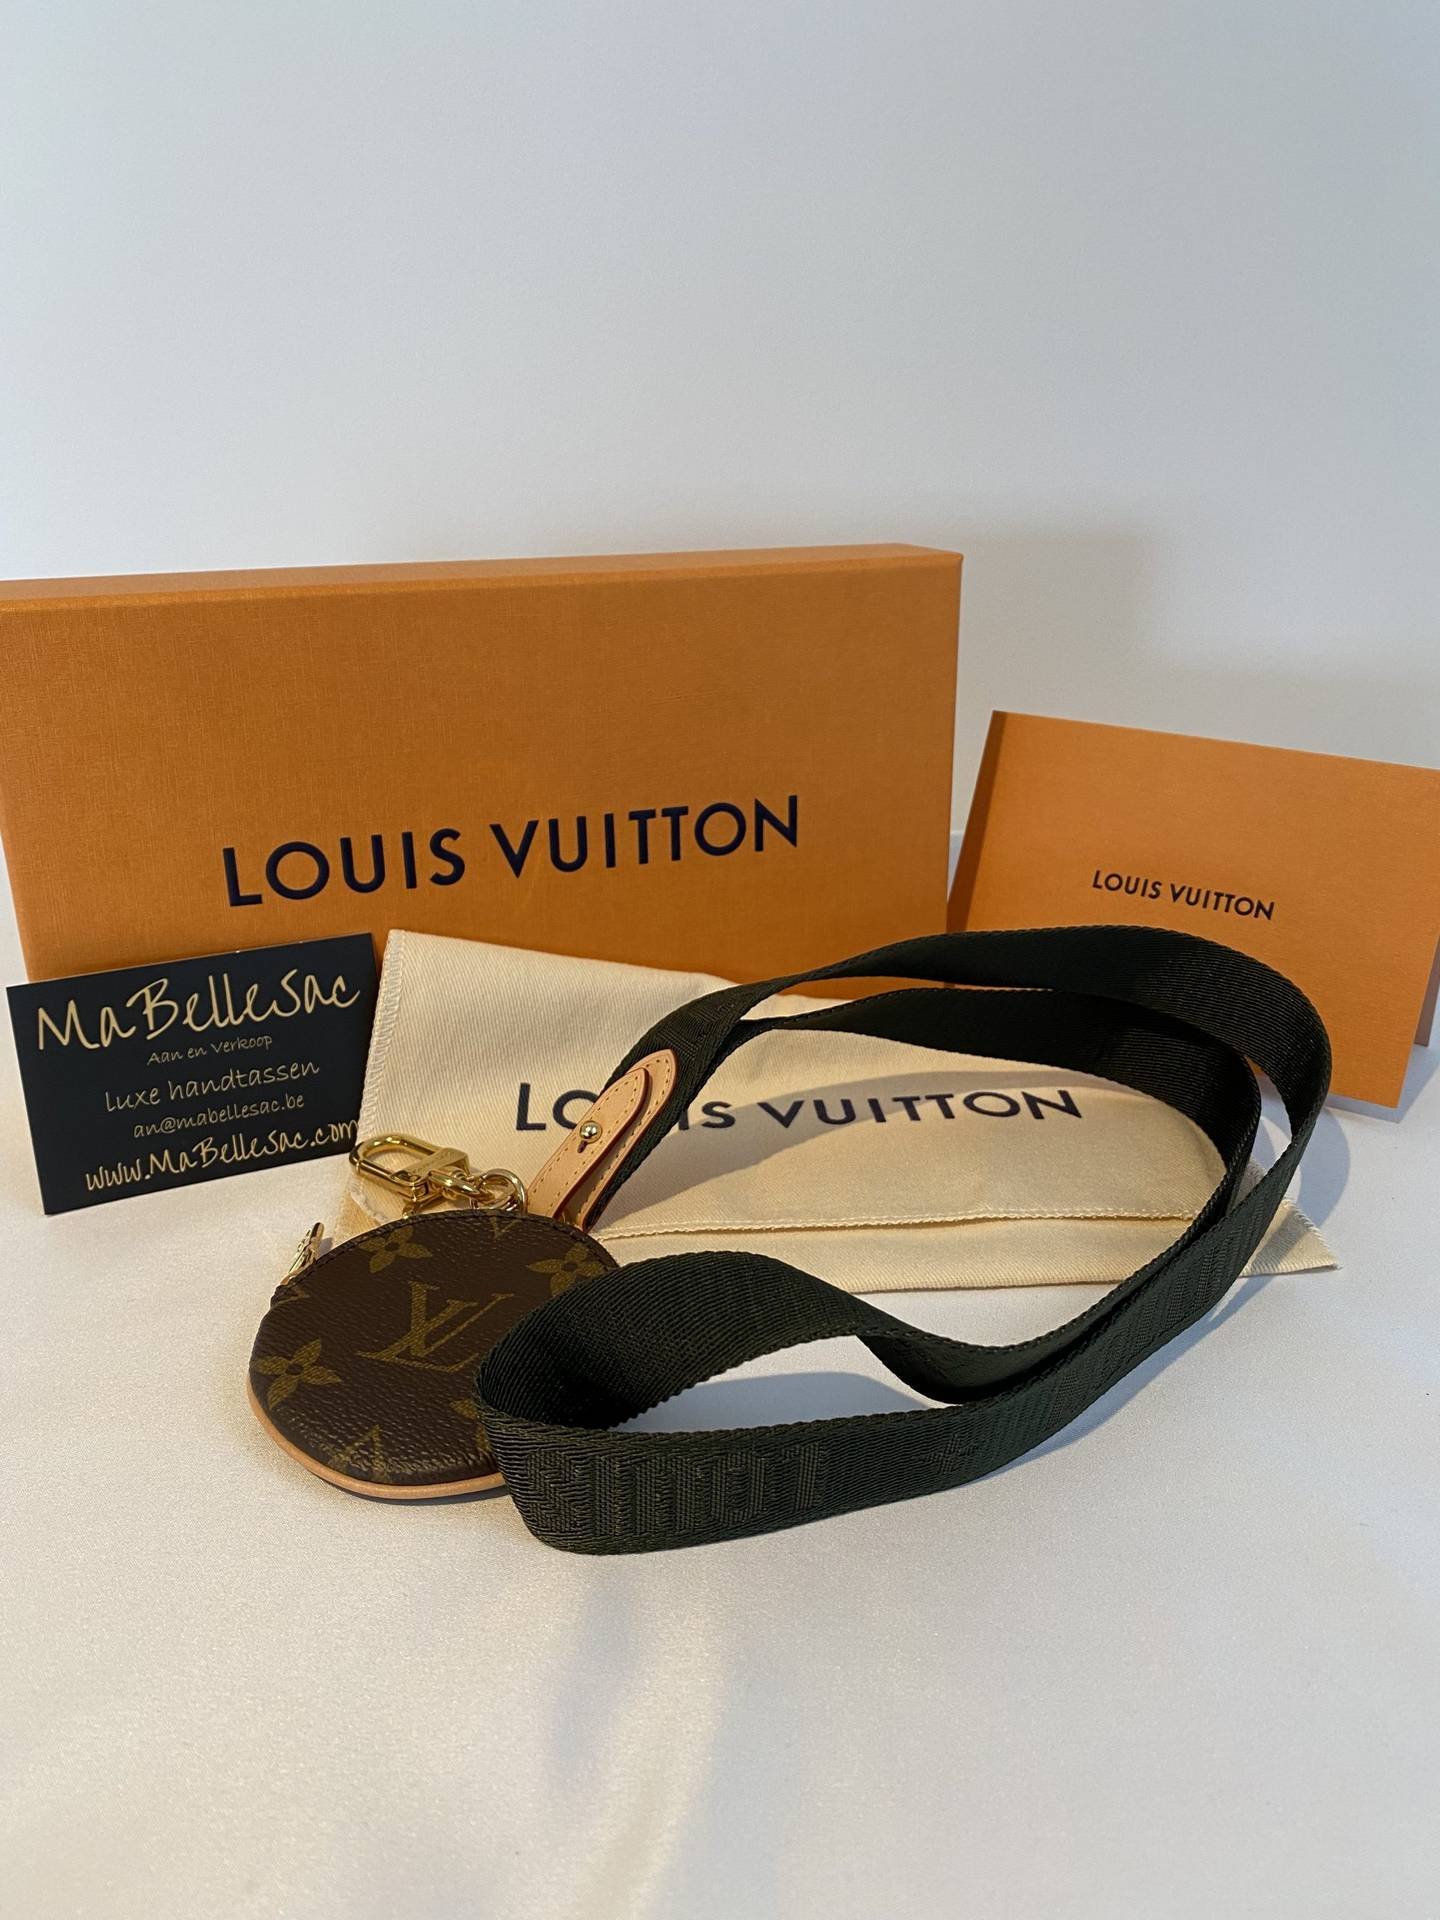 Louis Vuitton Small Ring Agenda Cover - Couture USA